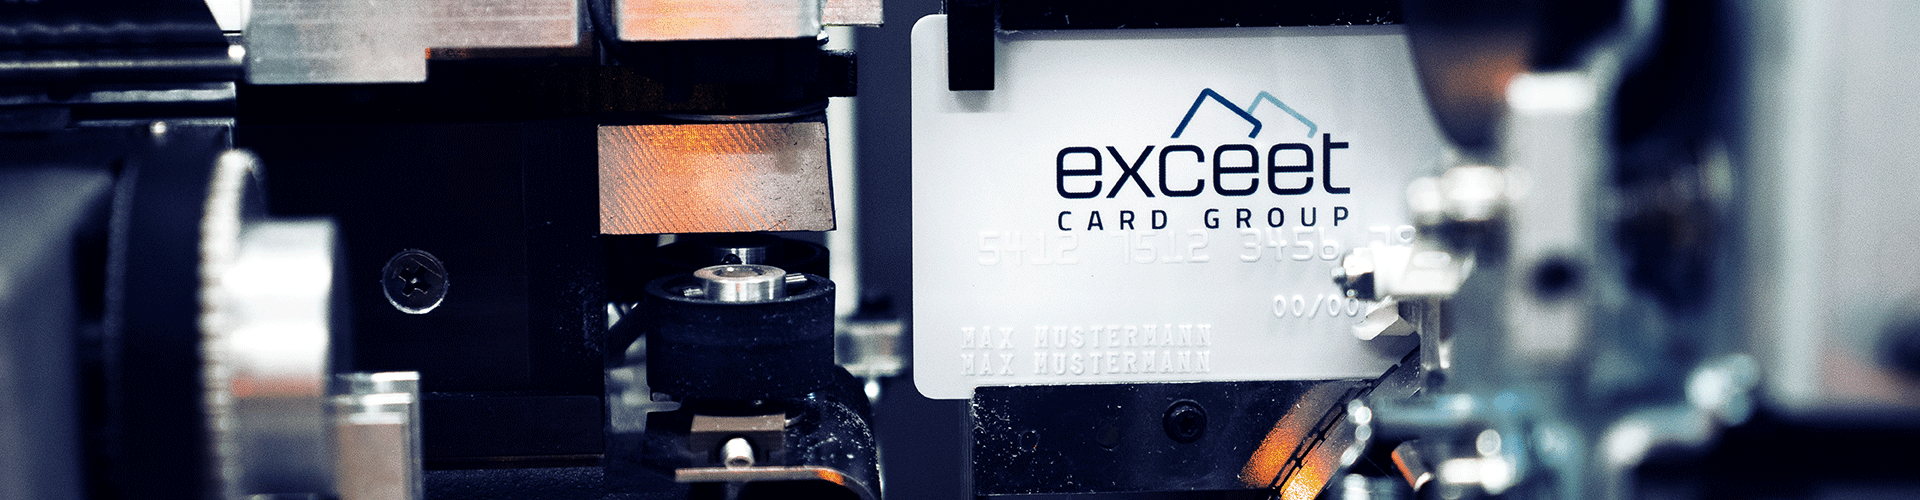 exceet Card Group - Plastikkarten Hersteller